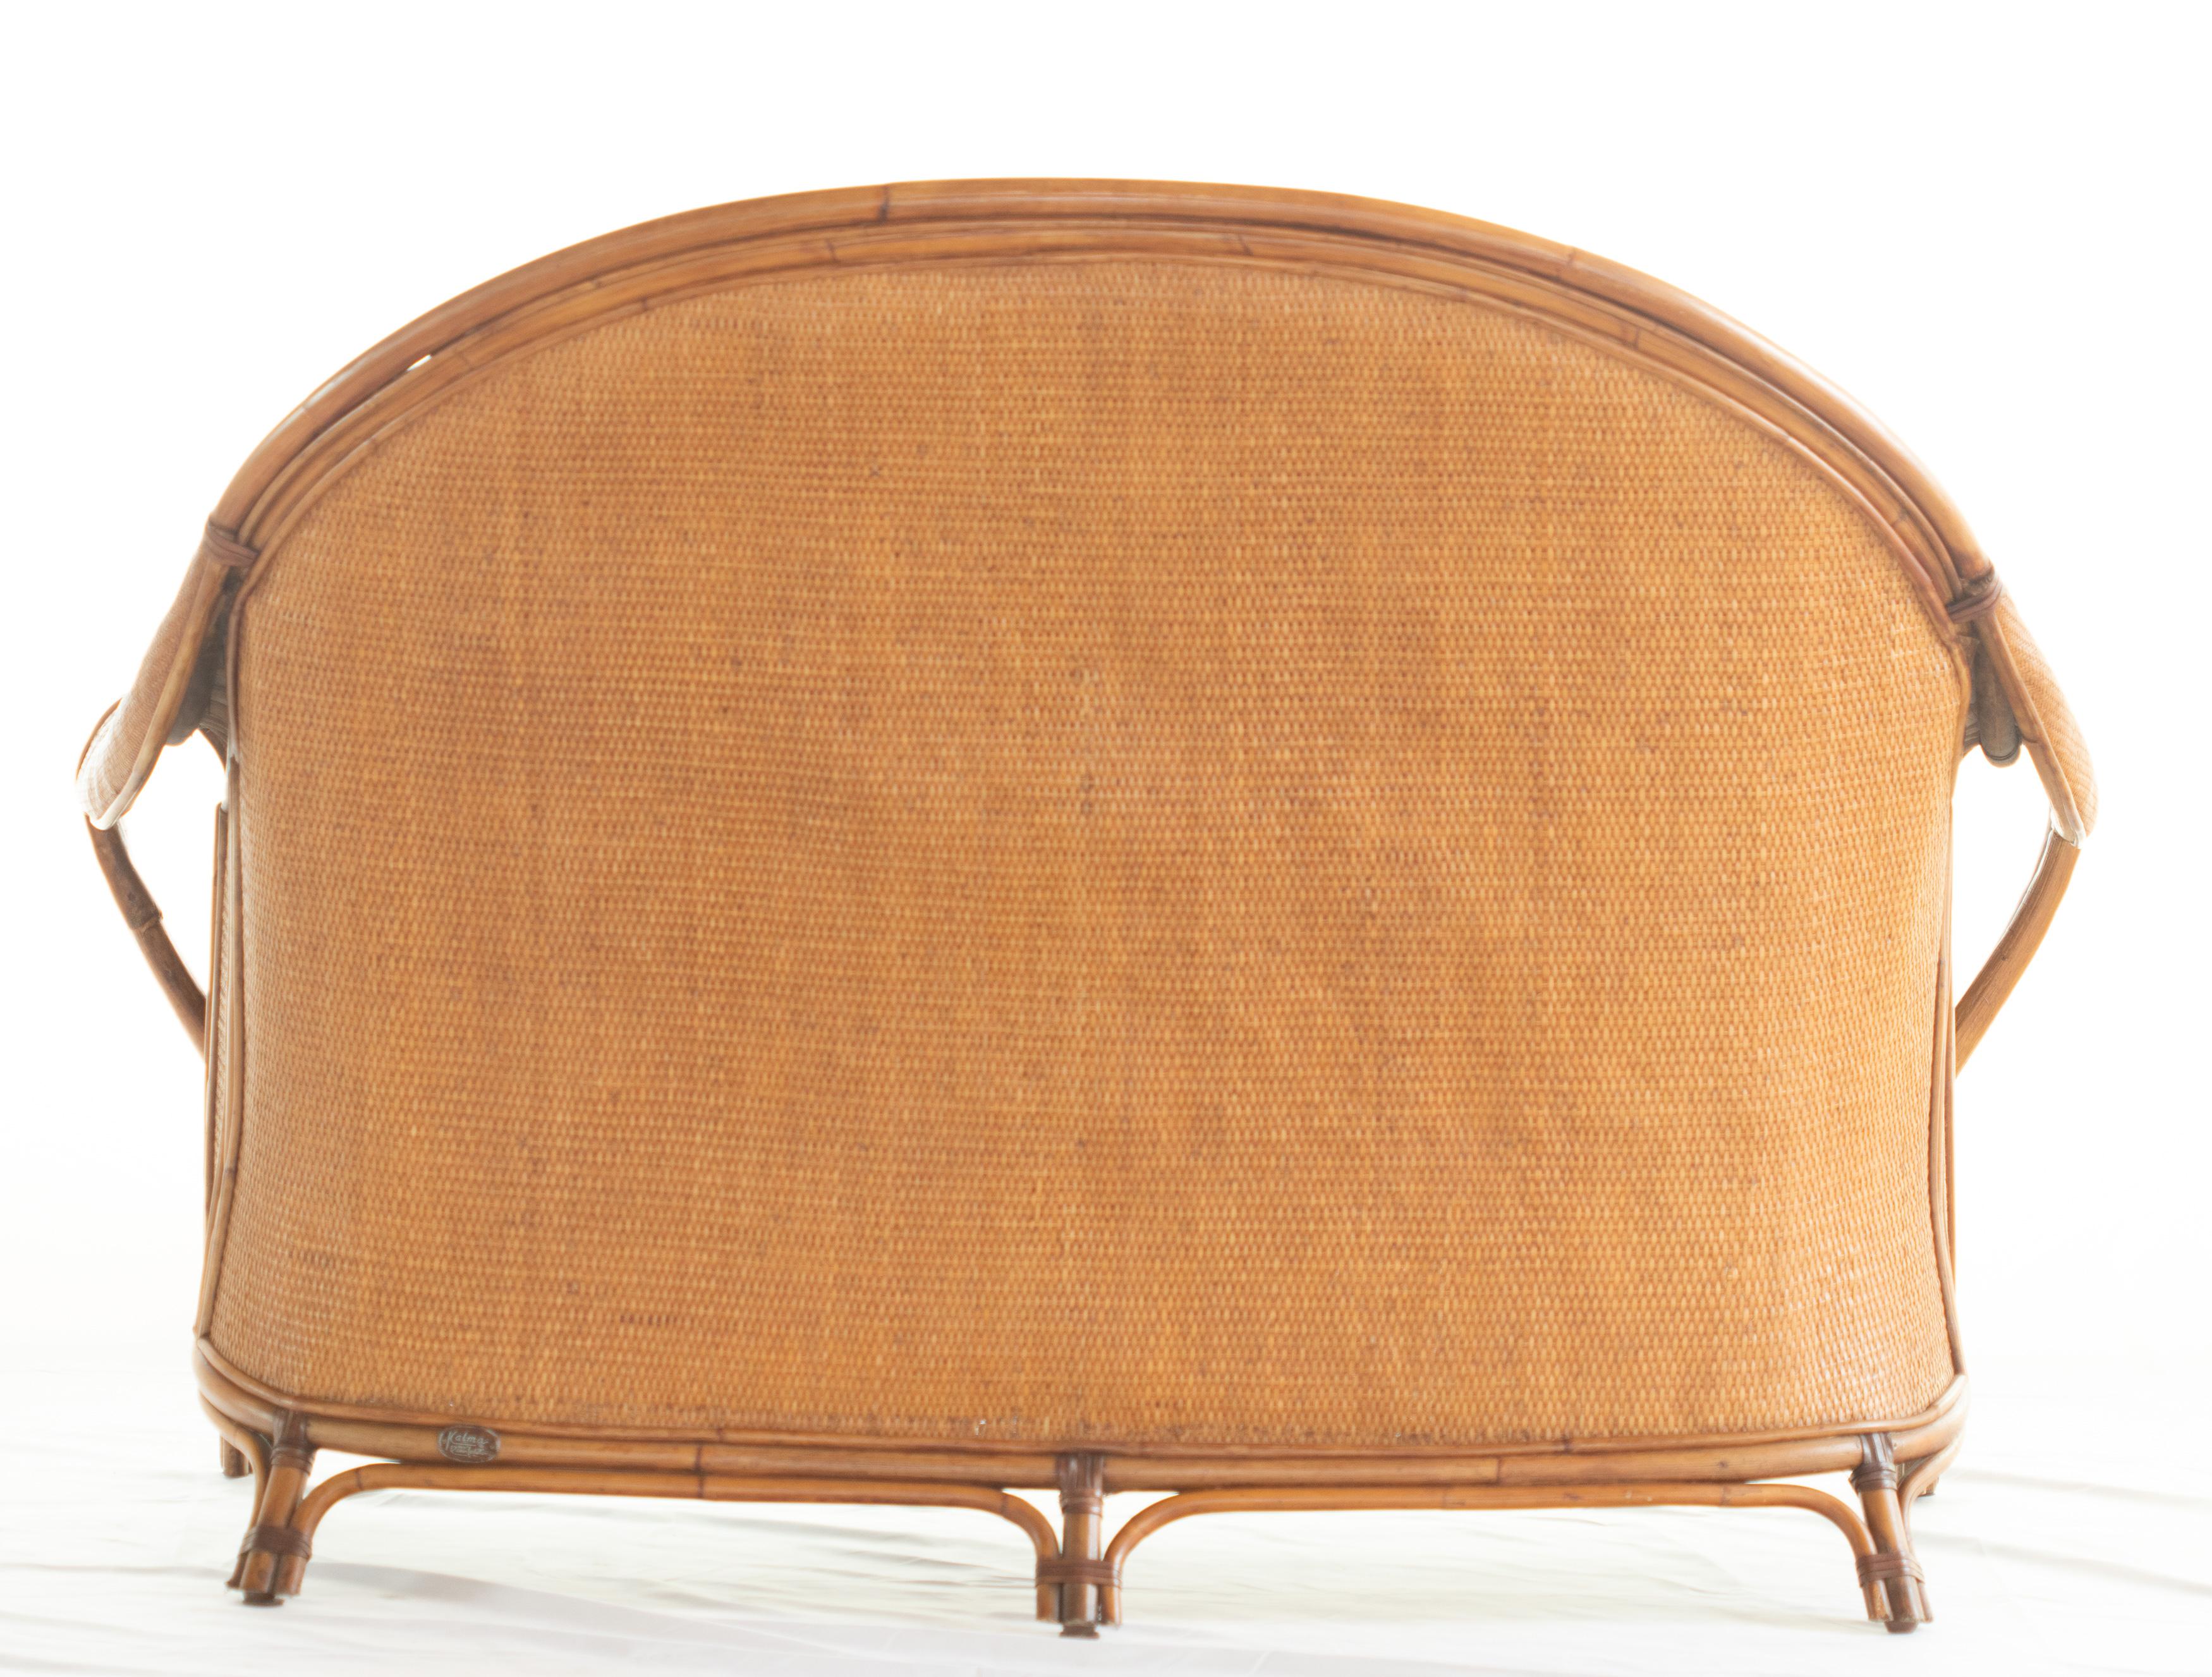 Chinese Export Sofa Bamboo Rattan Wood Painted Leather Ramon Castellano Spanish Kalma Furniture For Sale